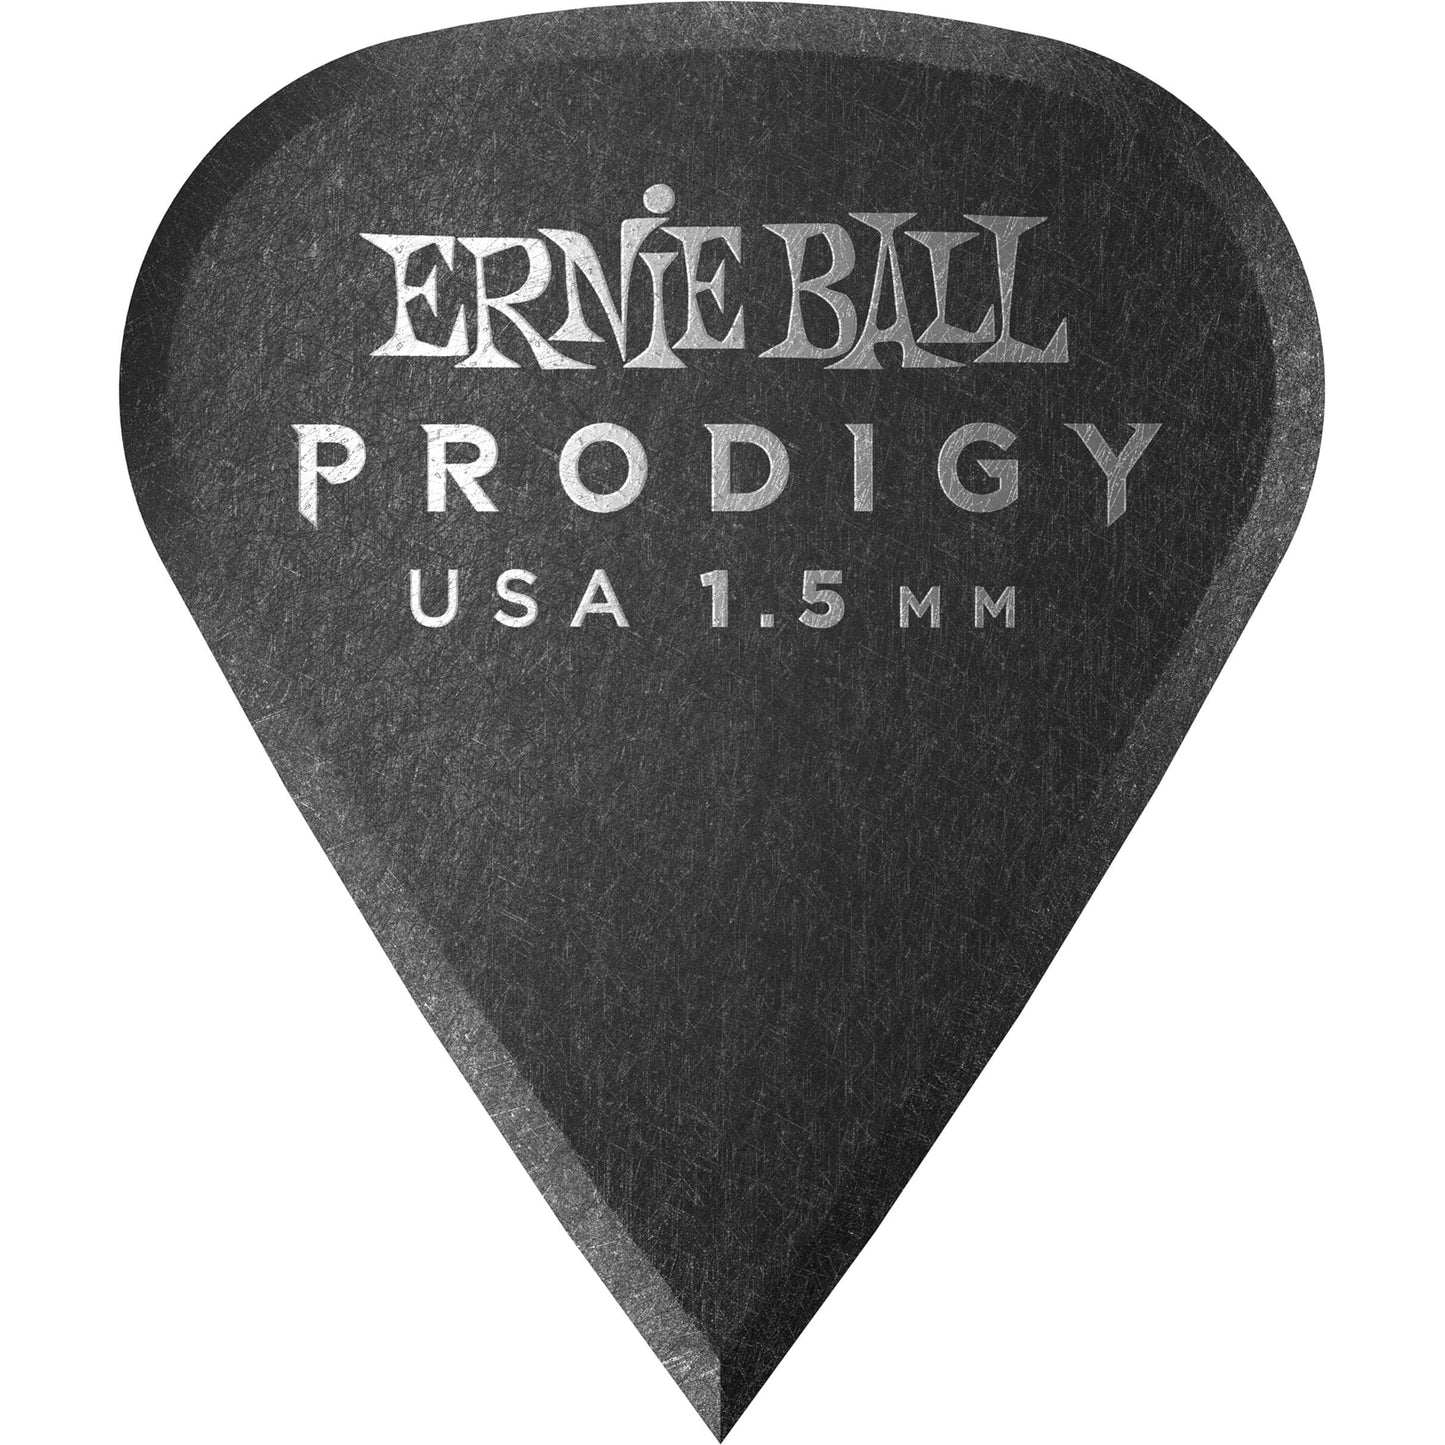 Ernie Ball Prodigy Sharp Guitar Picks (6-Pack), Black, 1.5mm